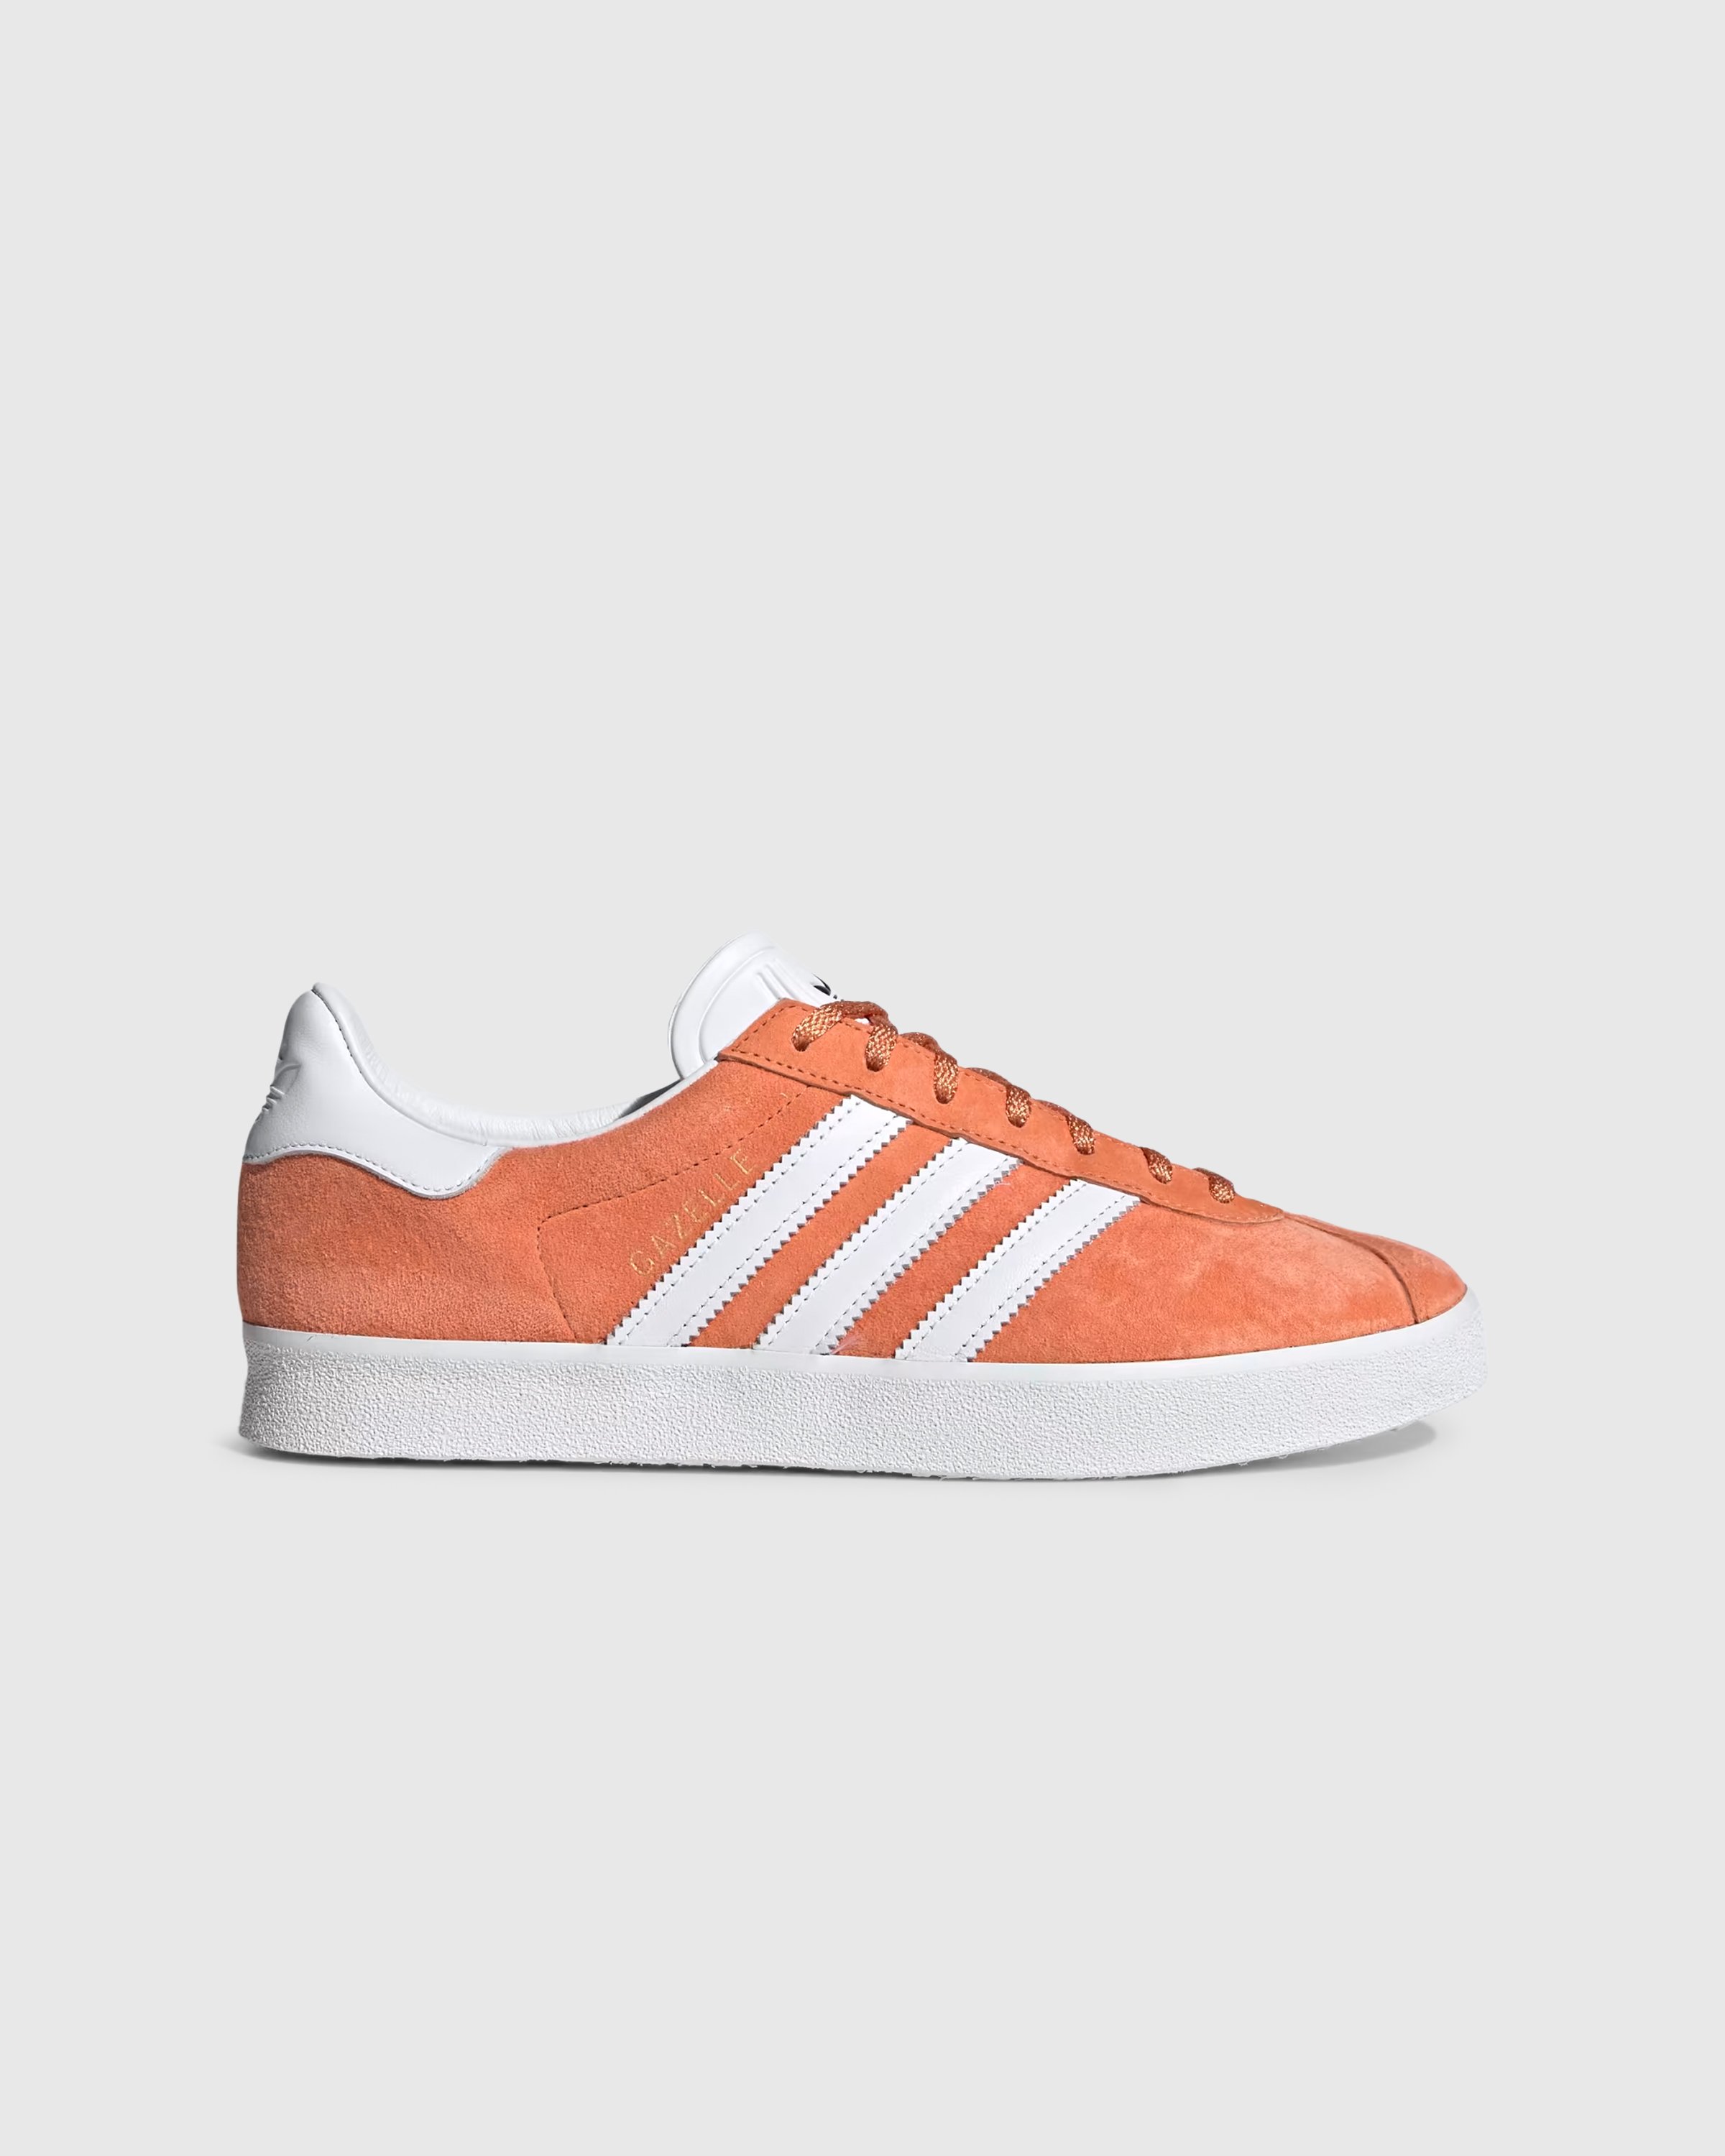 Adidas - Gazelle 85 Orange - Footwear - Orange - Image 1